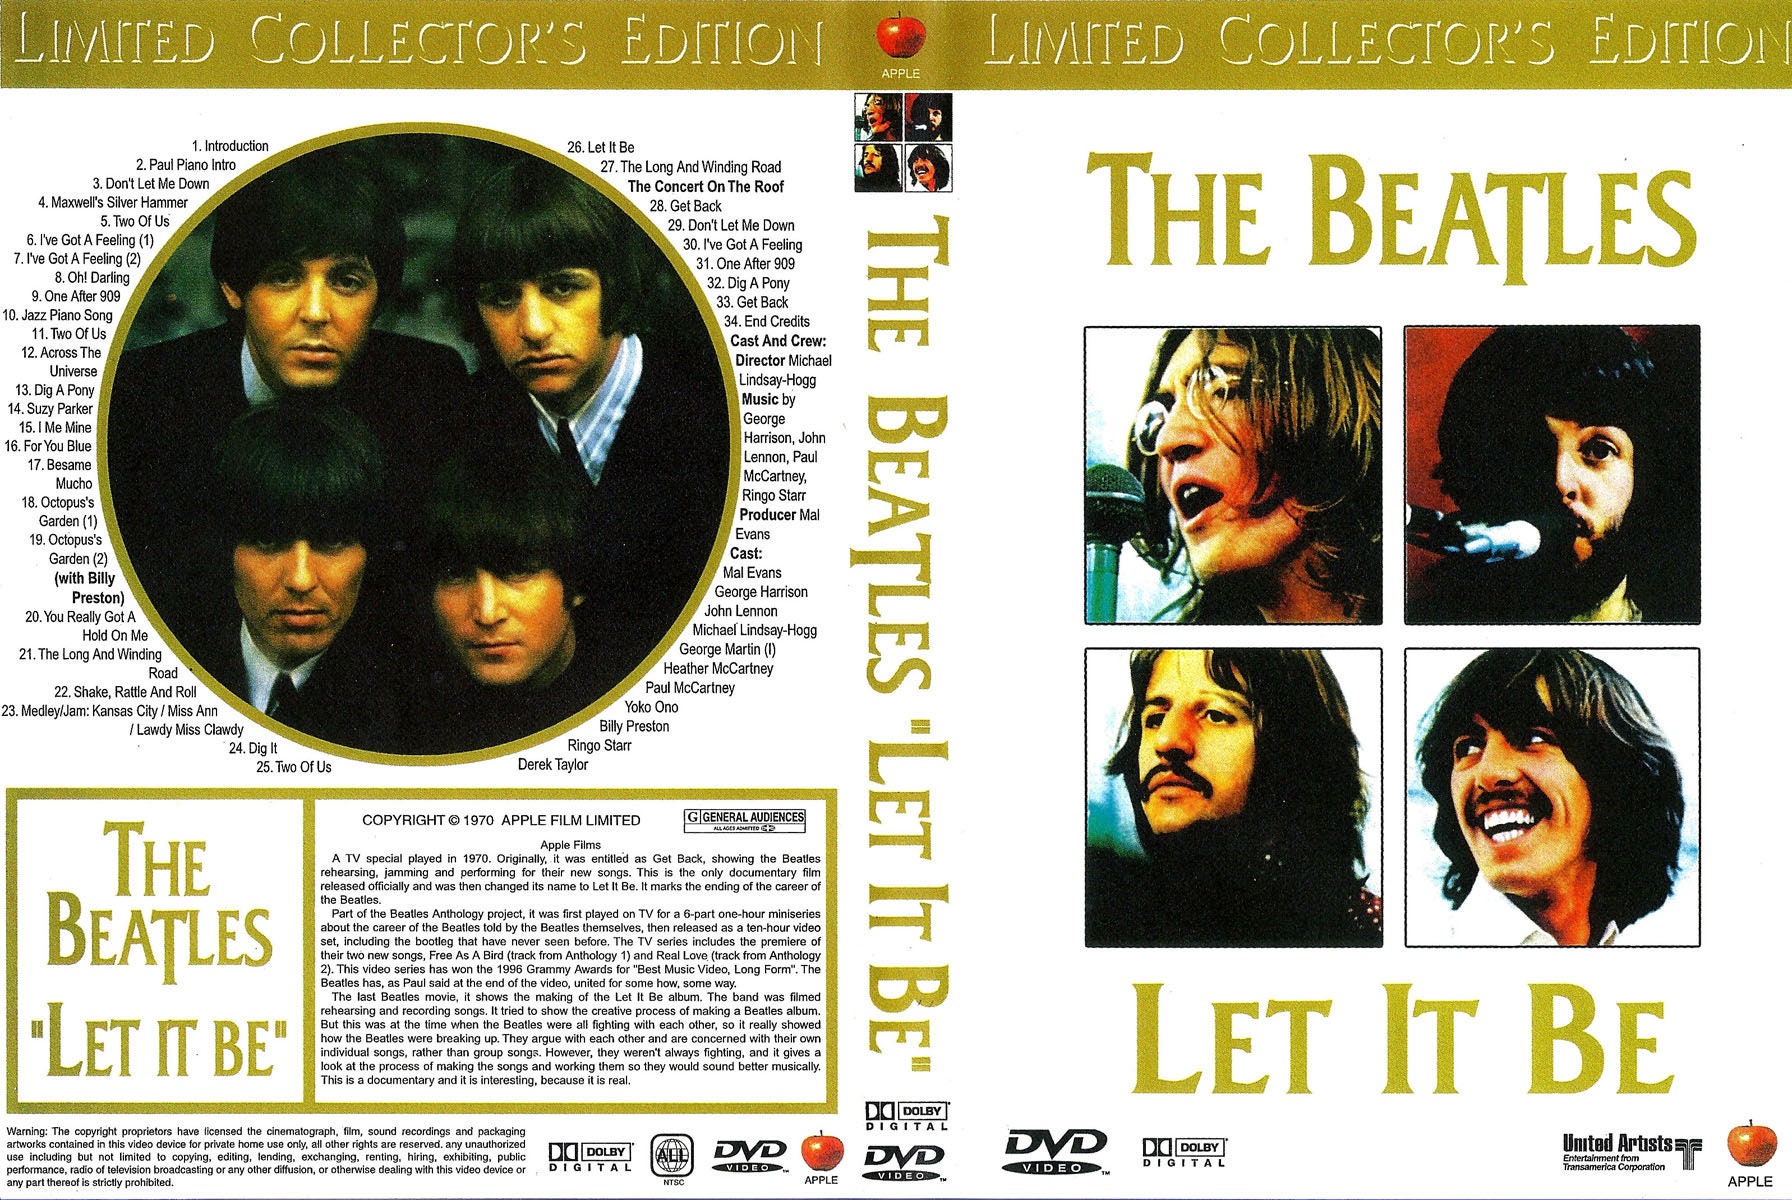 Лет ит би слушать. The Beatles Let it be 1970 обложка. The Beatles обложка для диска. Beatles "the Let it be" Автор. Beatles "the Let it be" Автор слов.